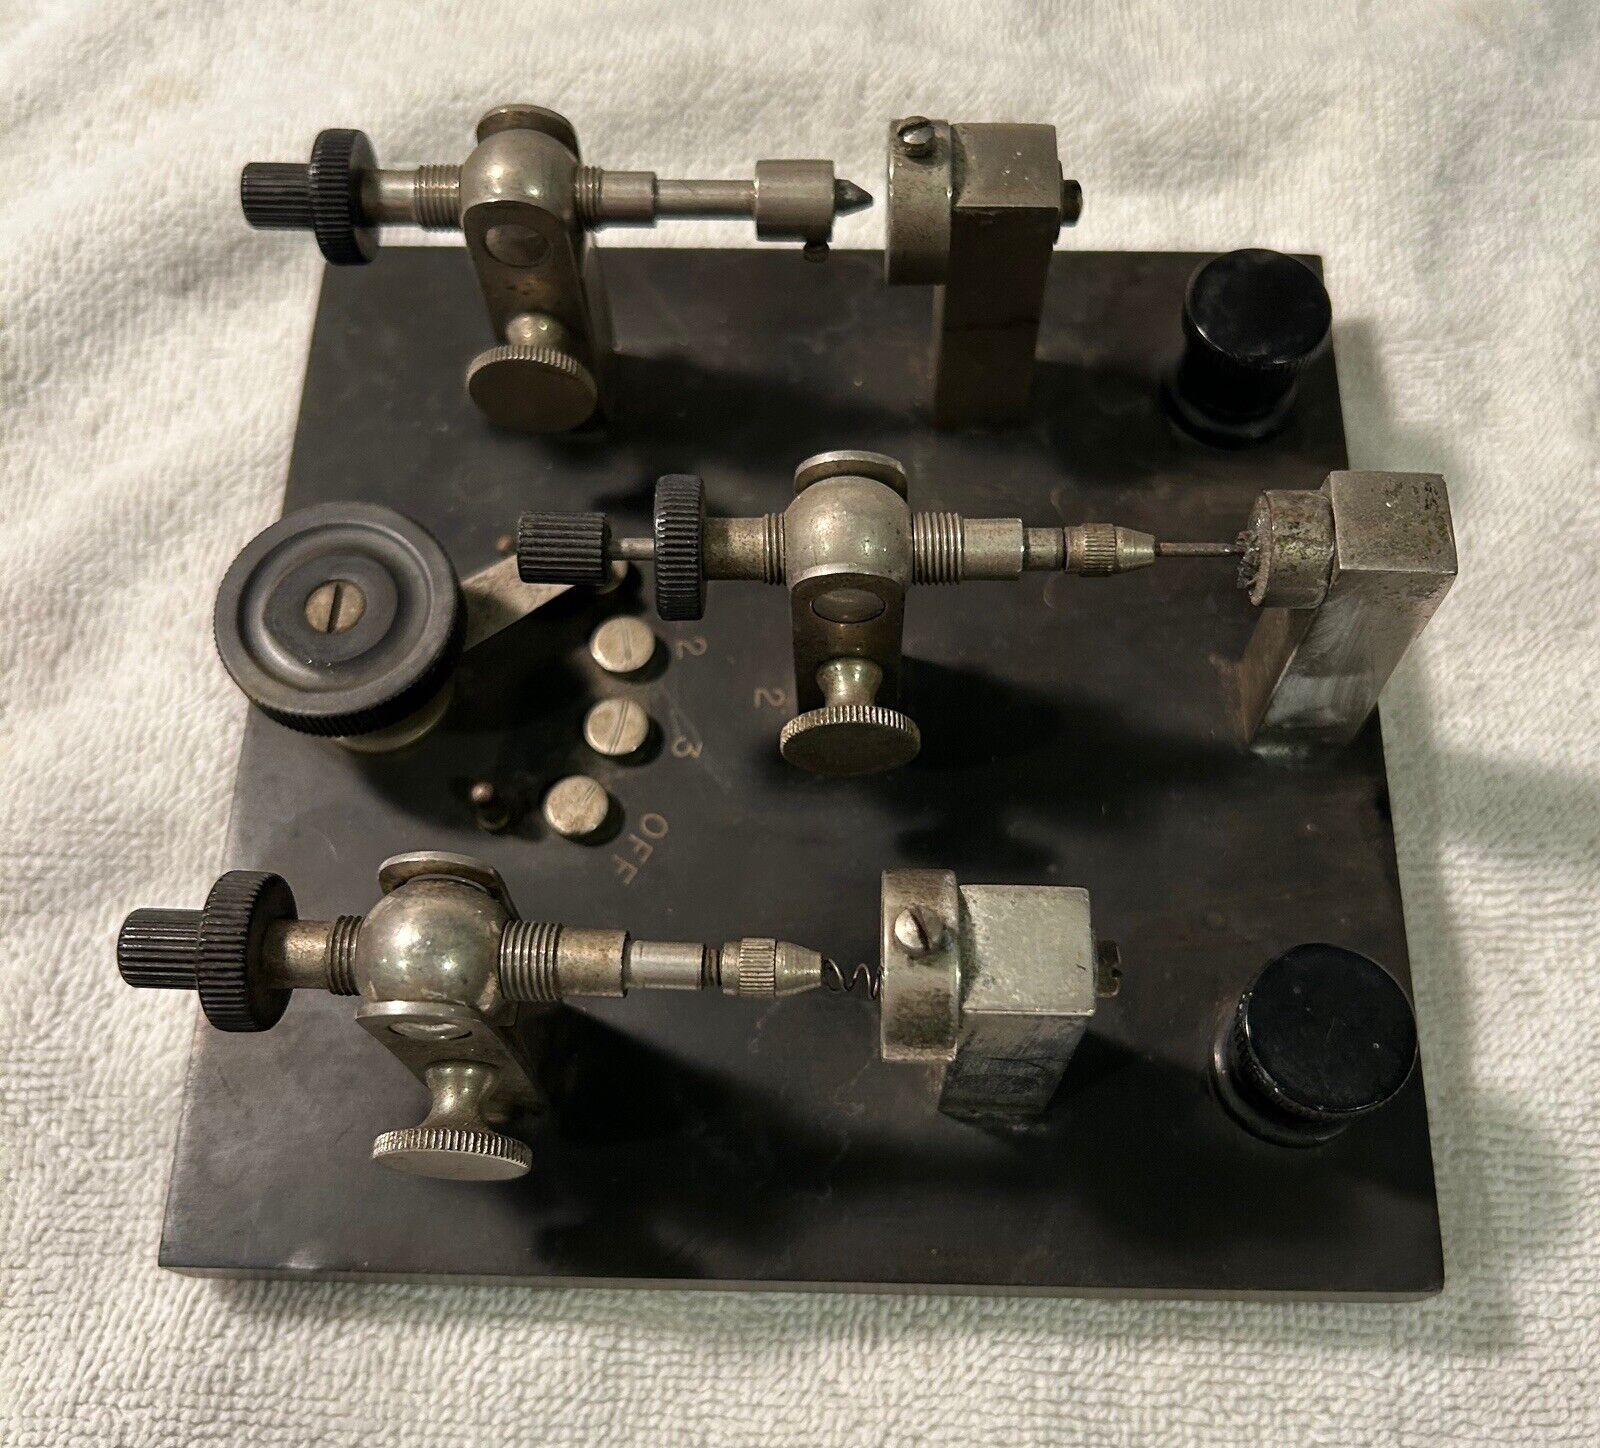 Very Rare WWI Type S.E. 183-A Triple Crystal Radio Detector (circa 1917)